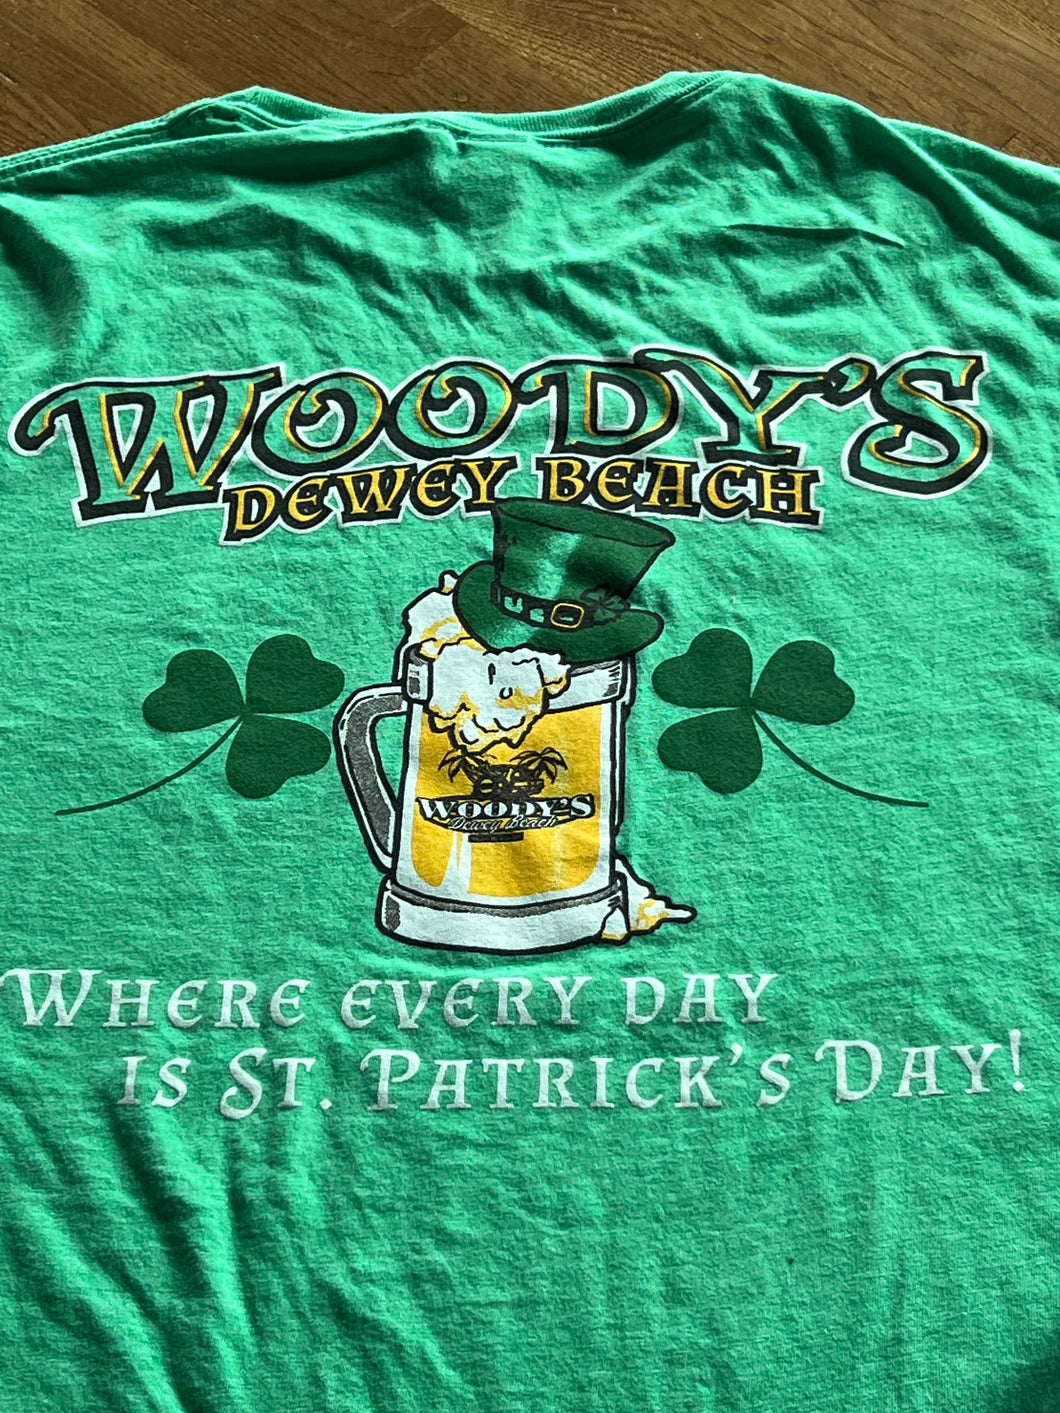 St Patrick’s Day Shirts